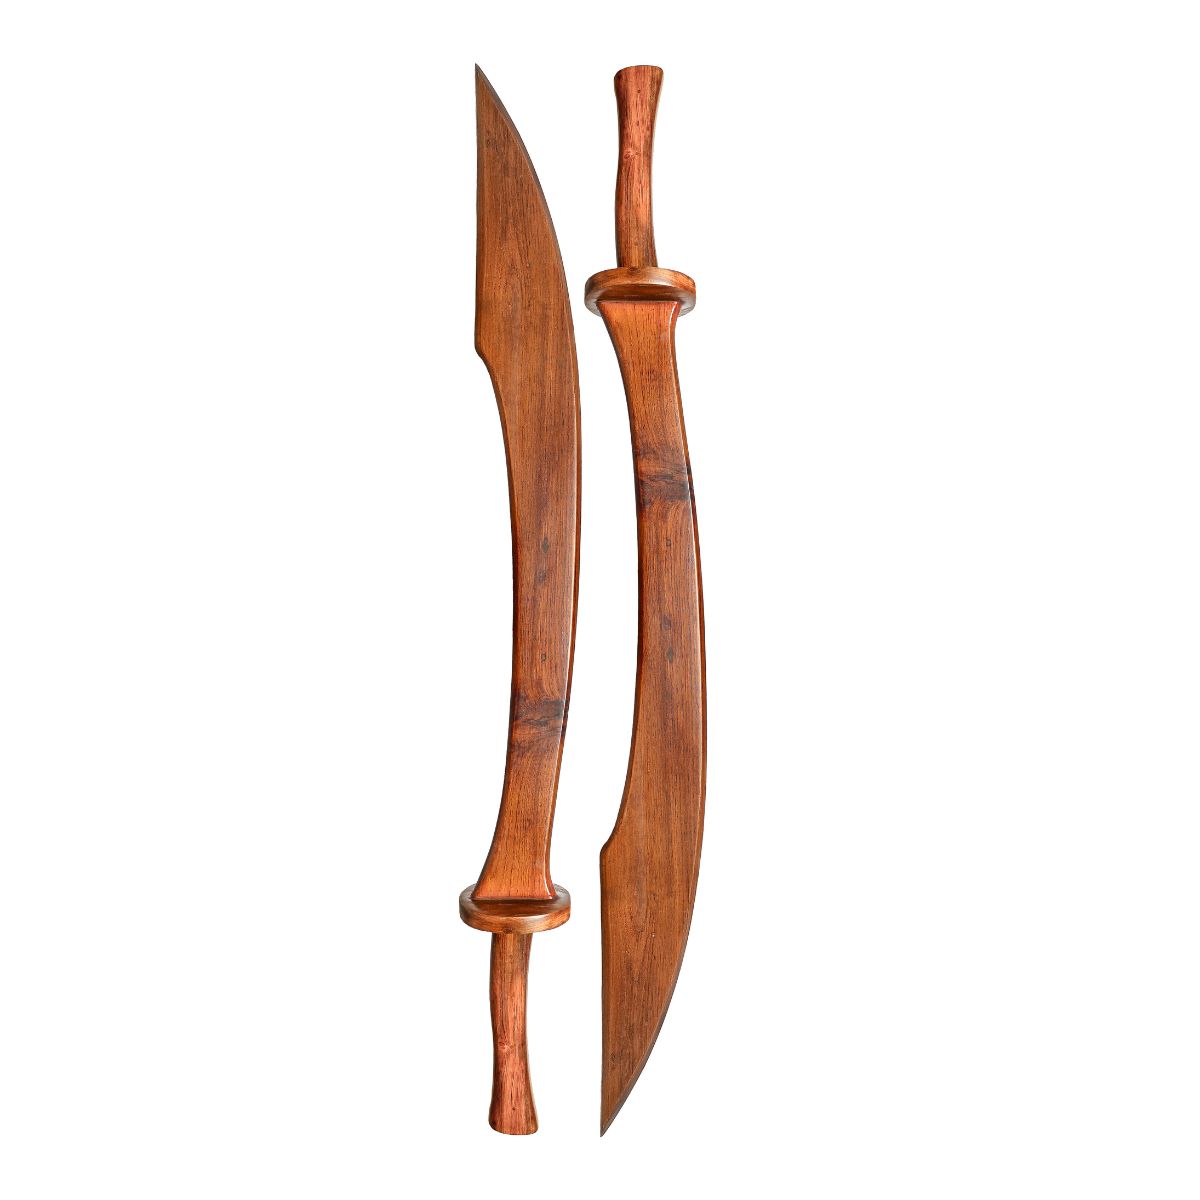 Wushu Wooden Practice Sword - Type B 5